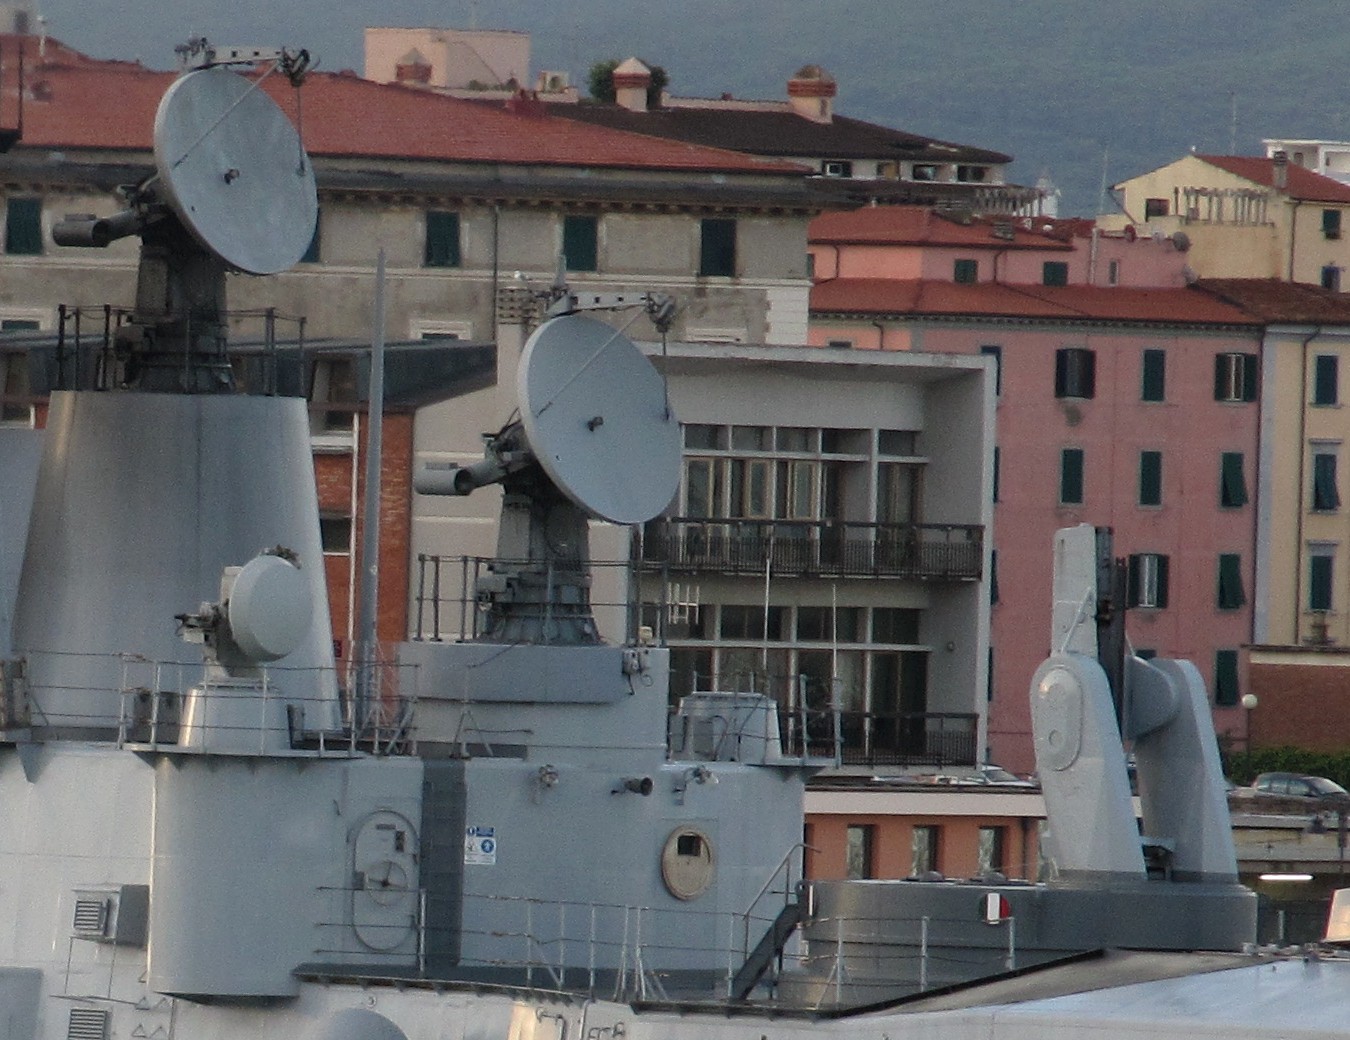 d-560 luigi durand de la penne its nave guided missile destroyer ddg italian navy marina militare 69a mk.13 launcher